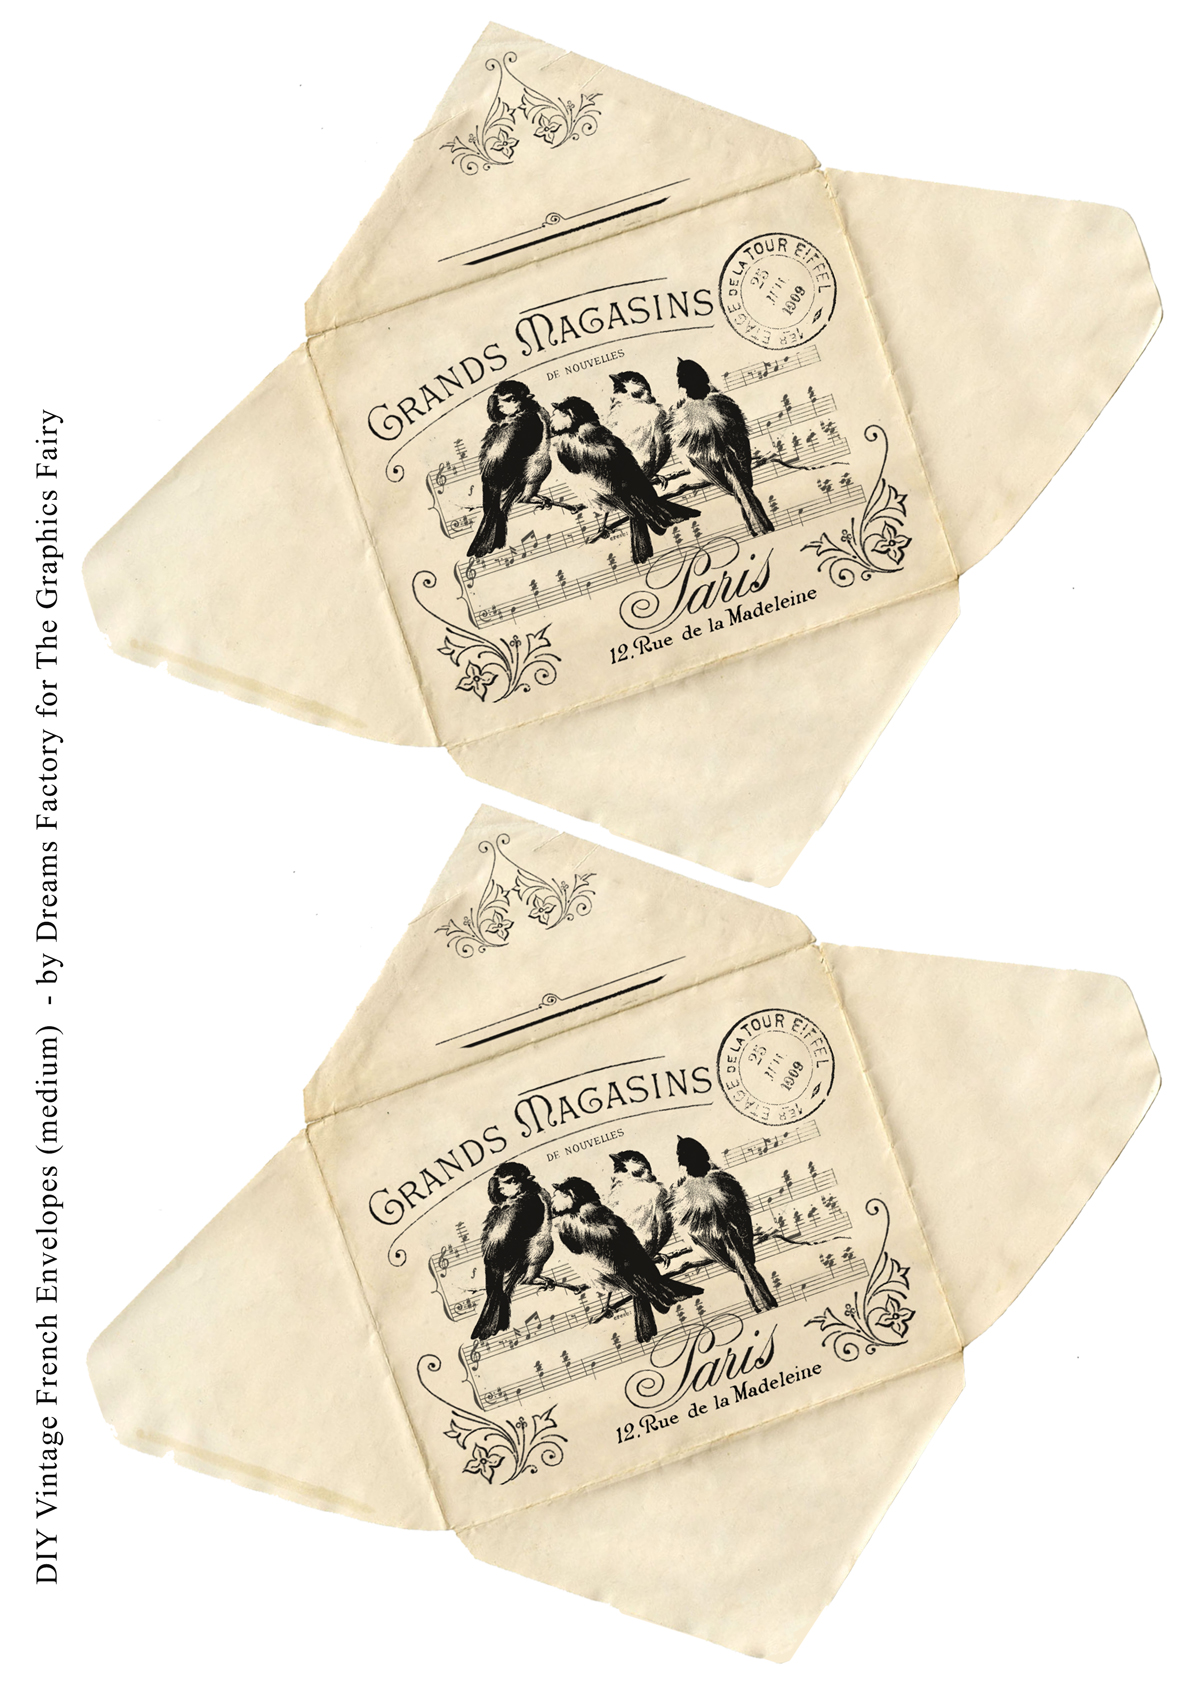 French bird collage on envelopes